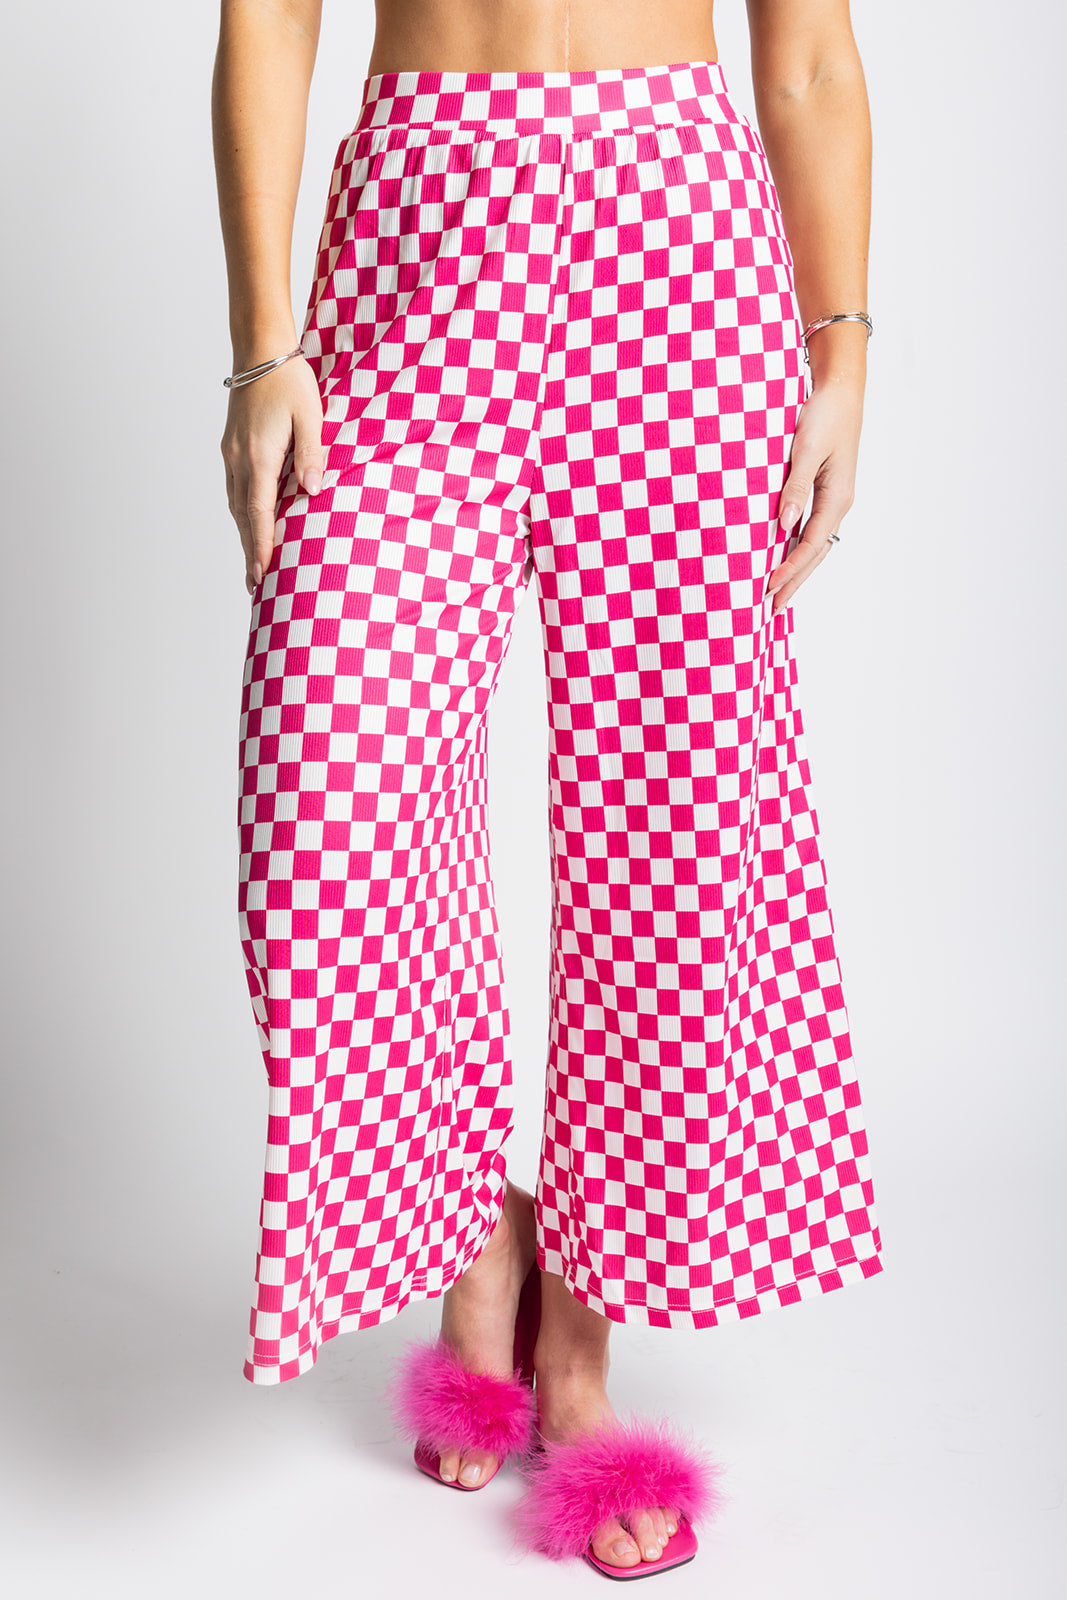 My Reputation Checkered Pants - Pink [S-3X]